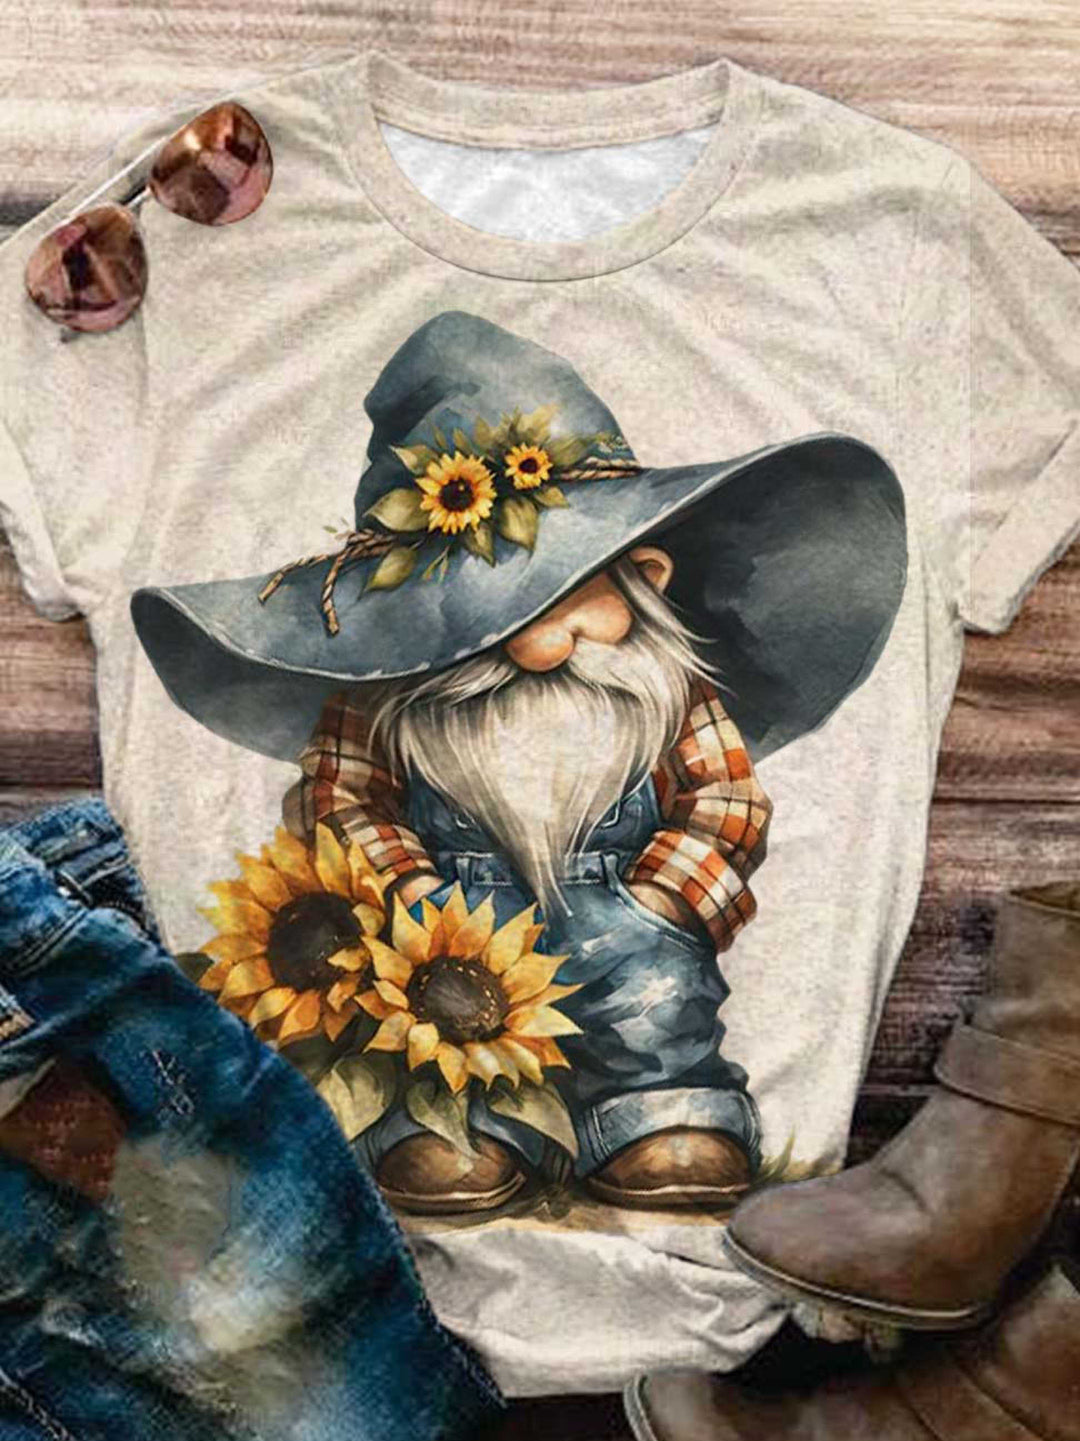 Sunflower Gnome Print Crew Neck T-Shirt